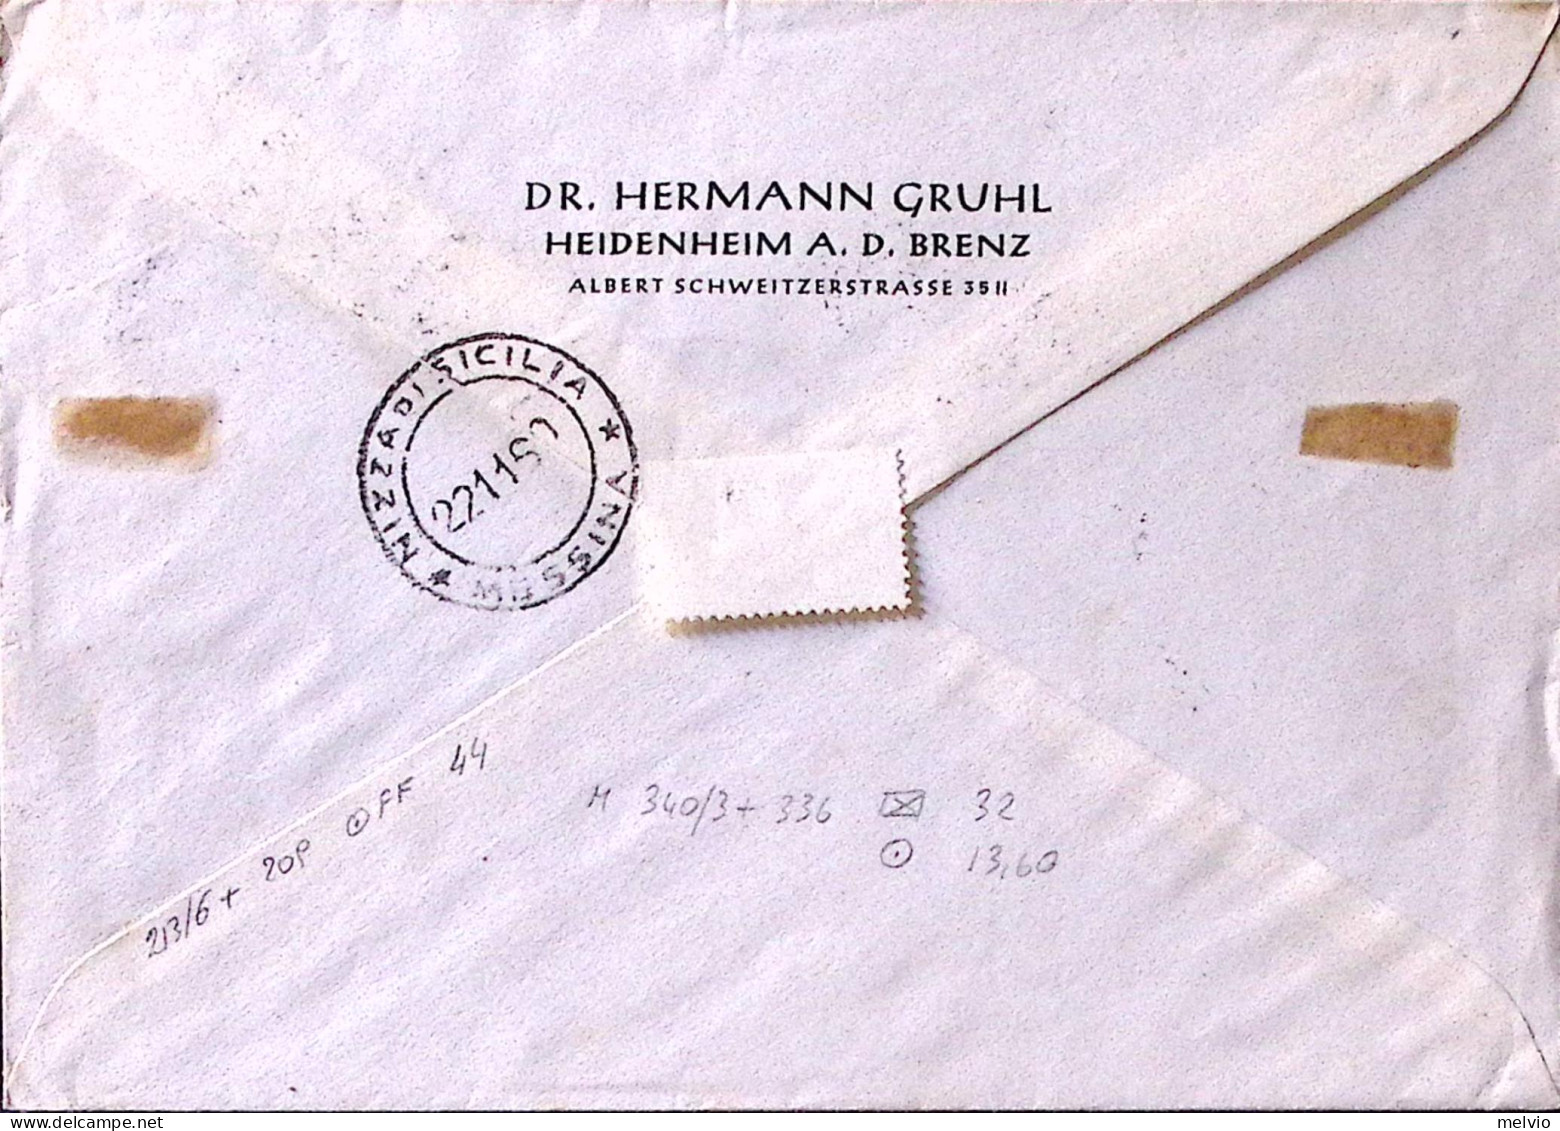 1960-GERMANIA Beneficenza1960 CAPUCCETTO ROSSO Serie Cpl. + S. Bernardo E Gottar - Covers & Documents